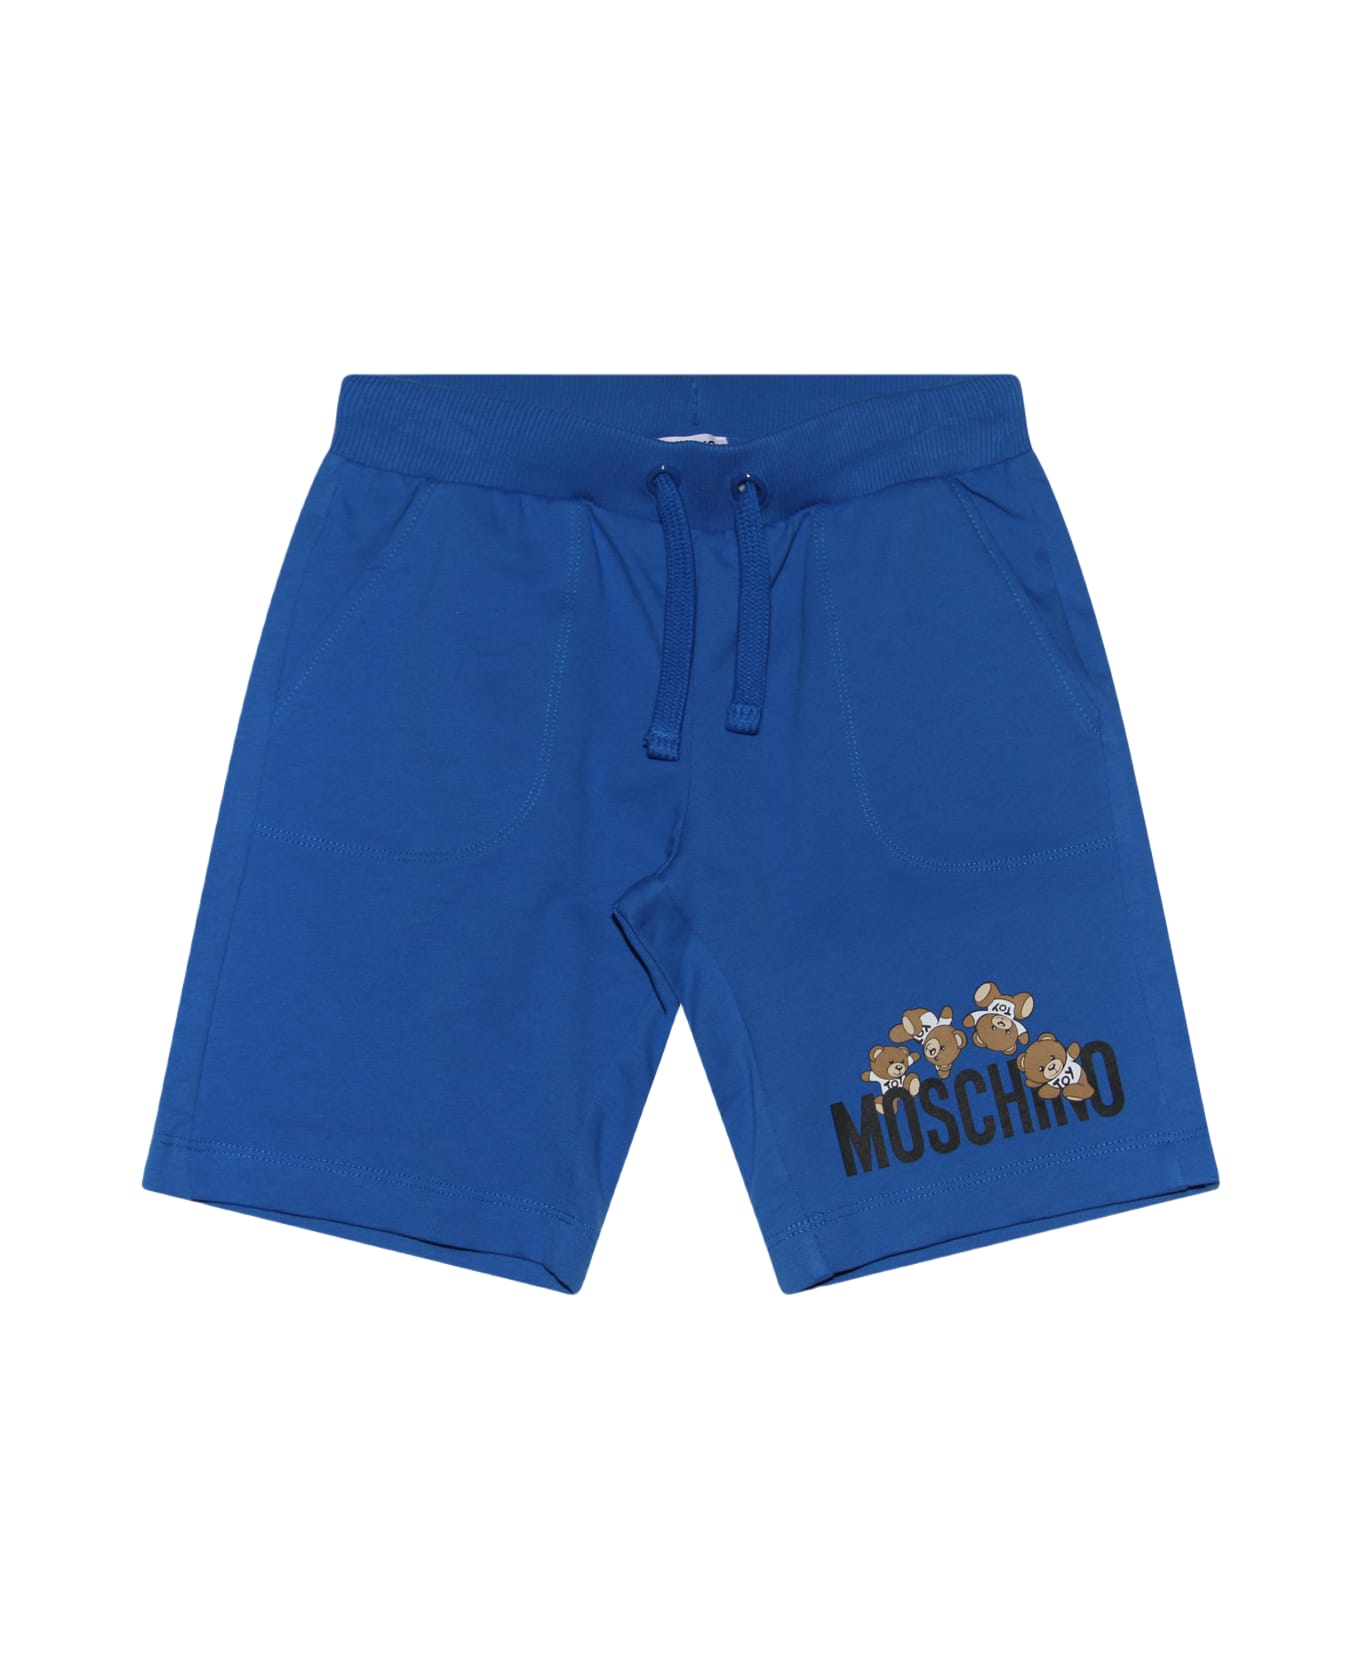 Moschino Blue Cotton Shorts - VICTORIA BLUE